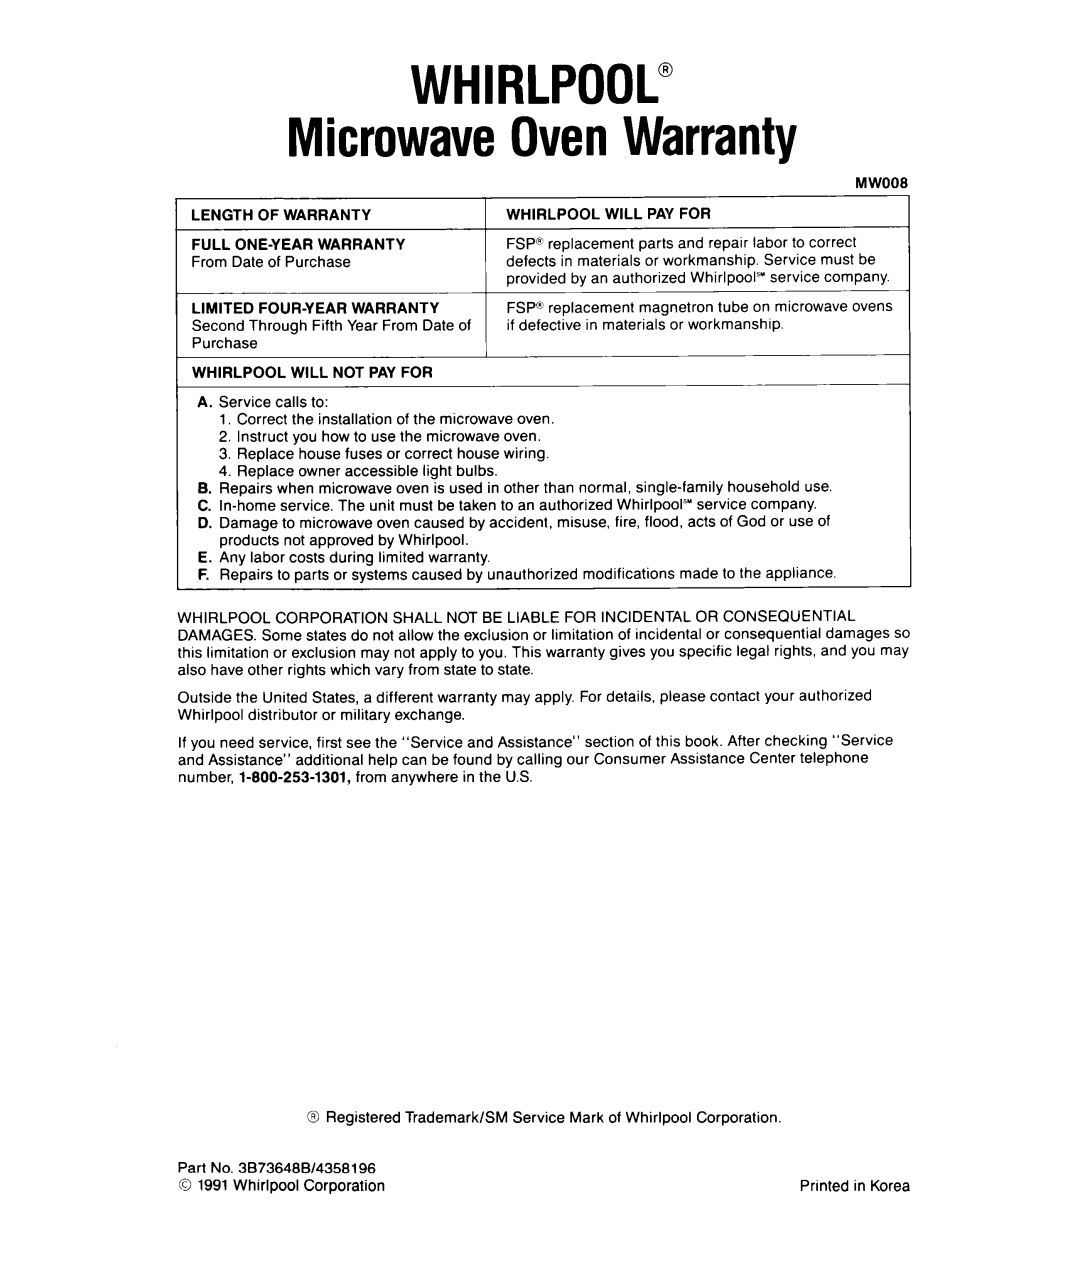 Whirlpool MTZ080XY user manual WHIRLPOOL” MicrowaveOvenWarranty 